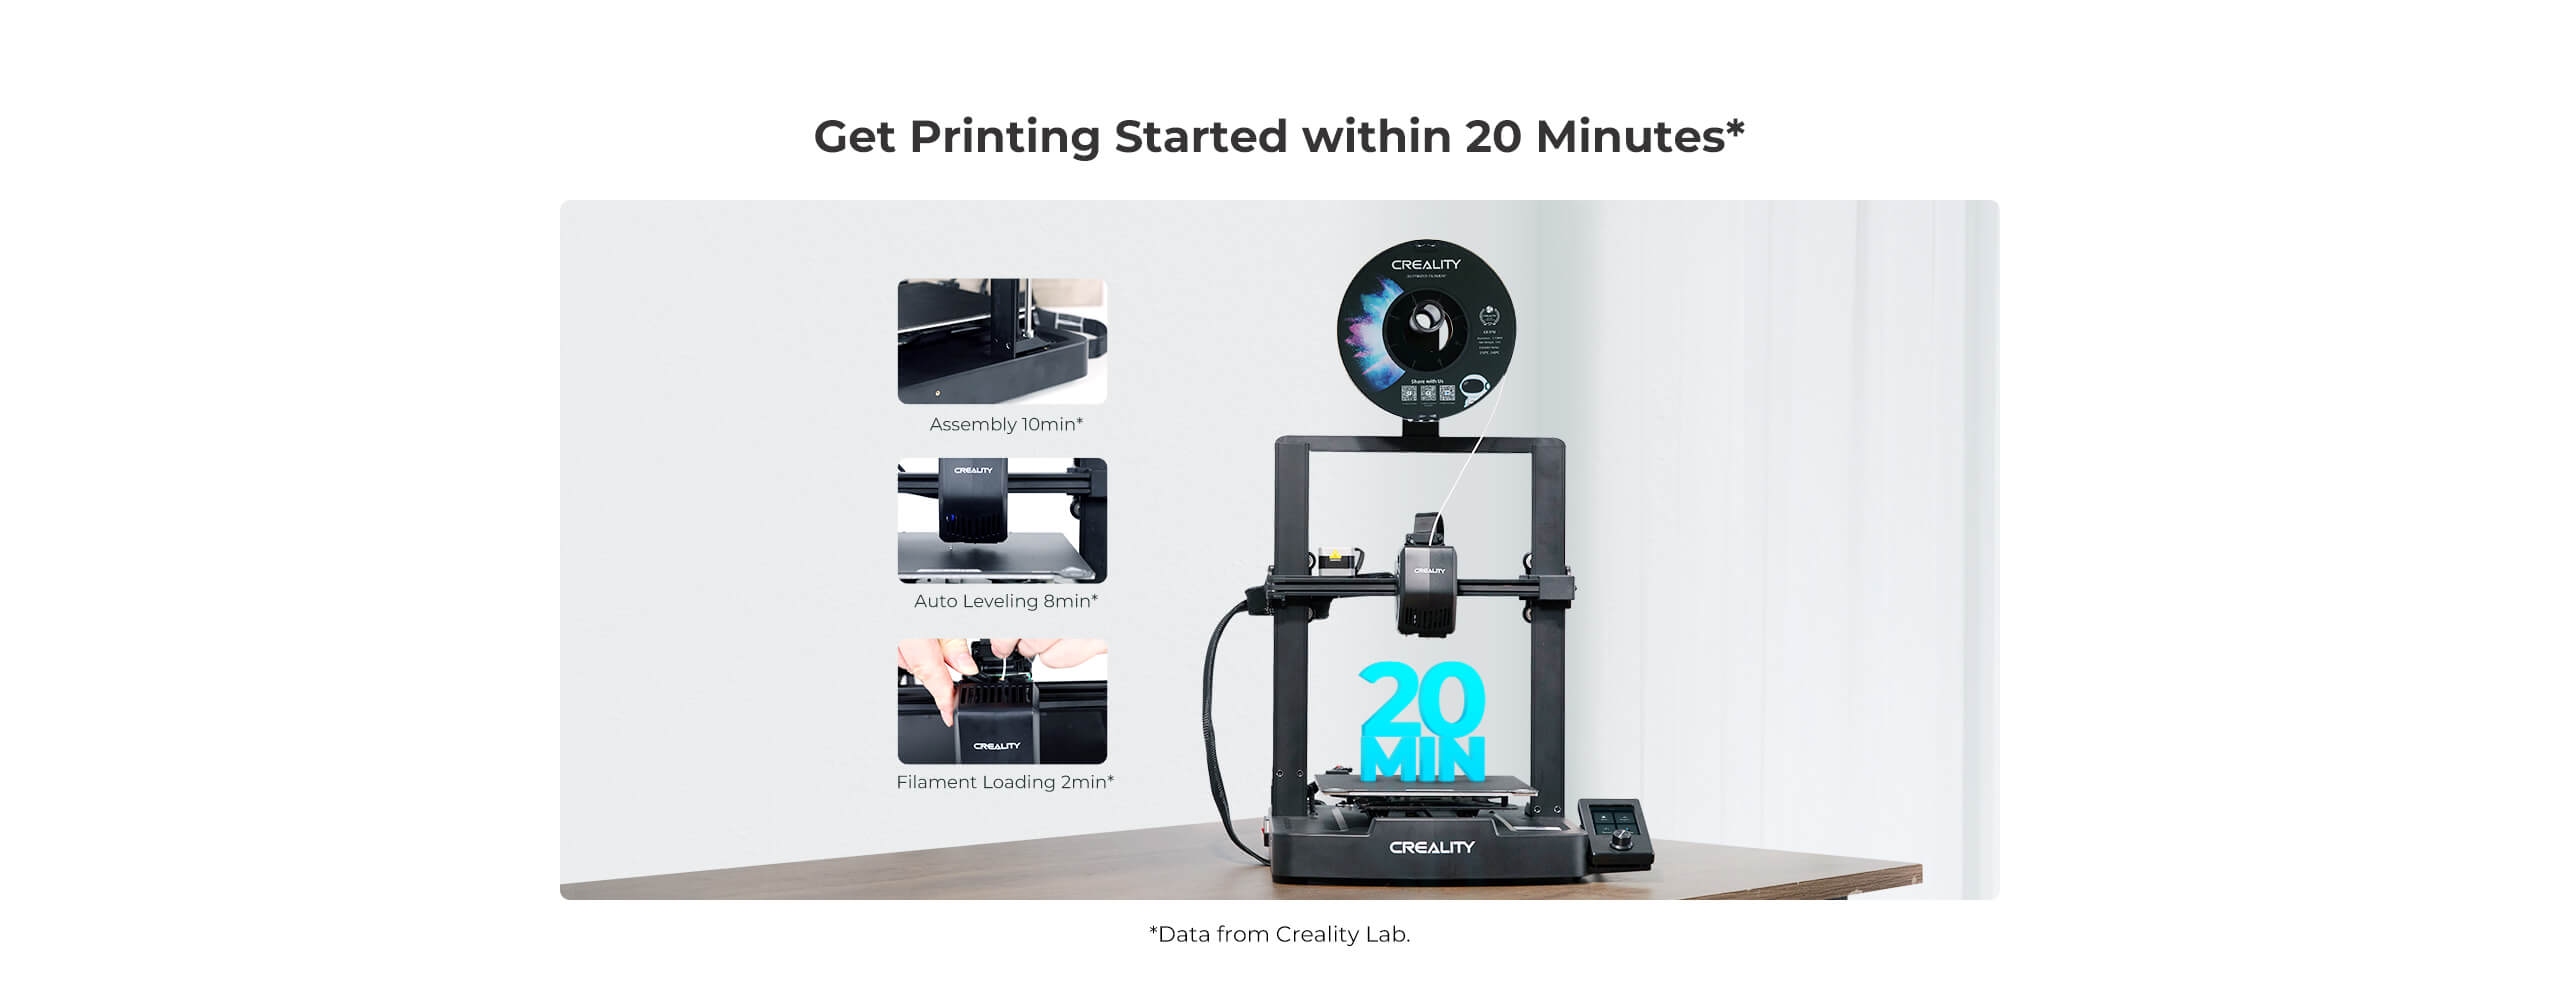 Using Ender 3 V3 SE get printing started within 20 minutes